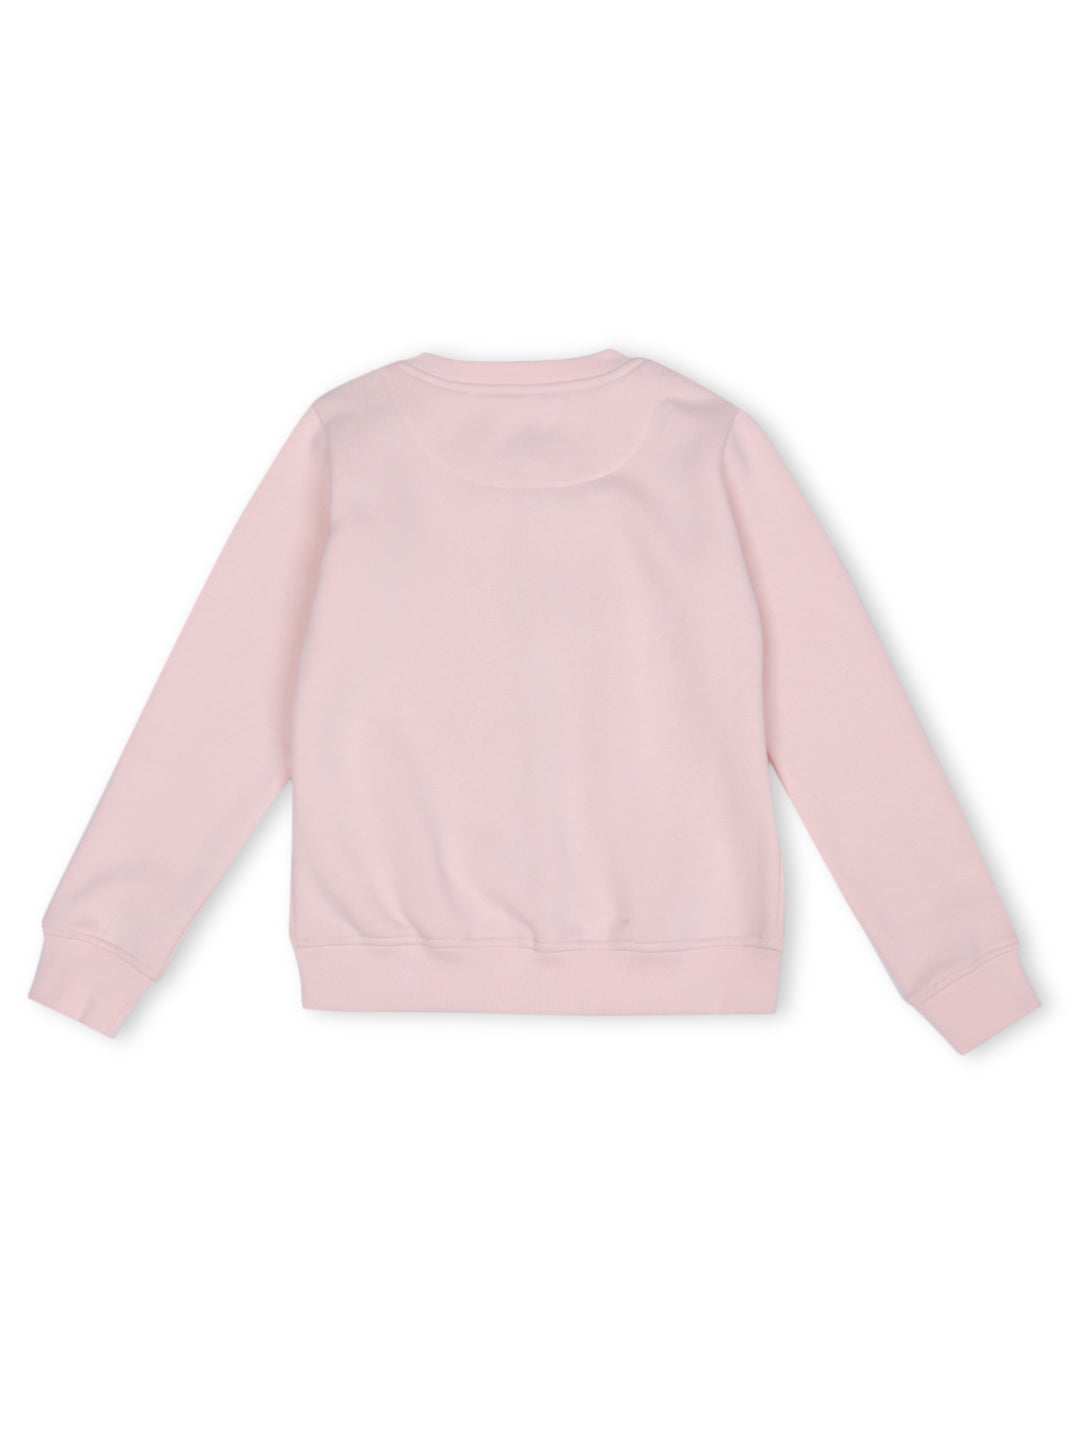 Girls Pink Printed Woven Knits Jacket